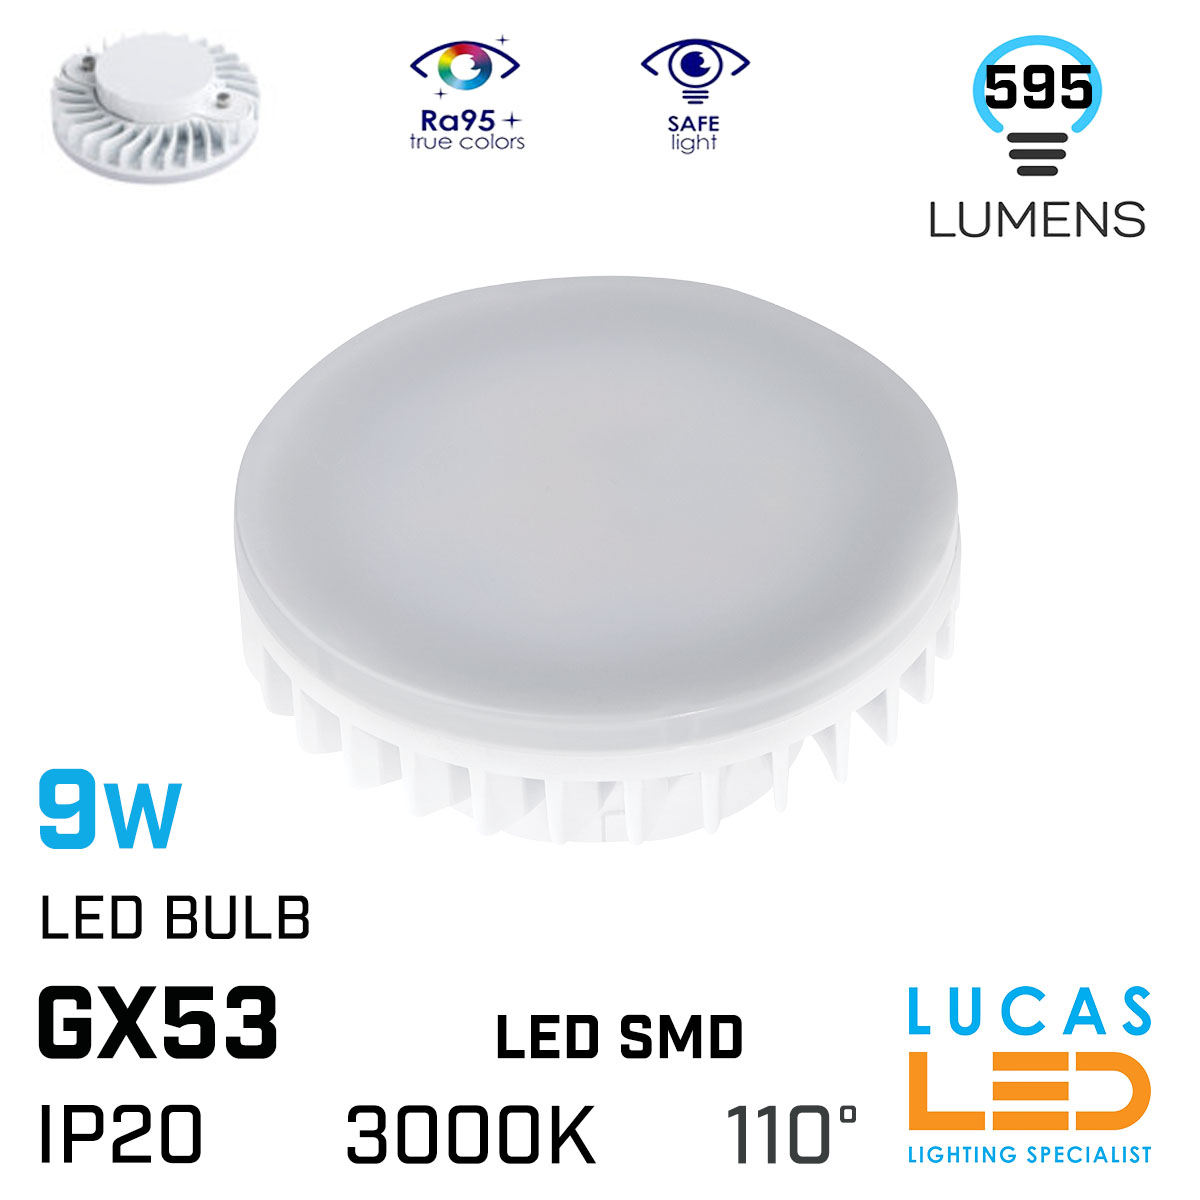 GX53 LED Bulb spot Light 9W - 3000K Warm White - 595lm - viewing angle 120° - Led SMD - ESG Led